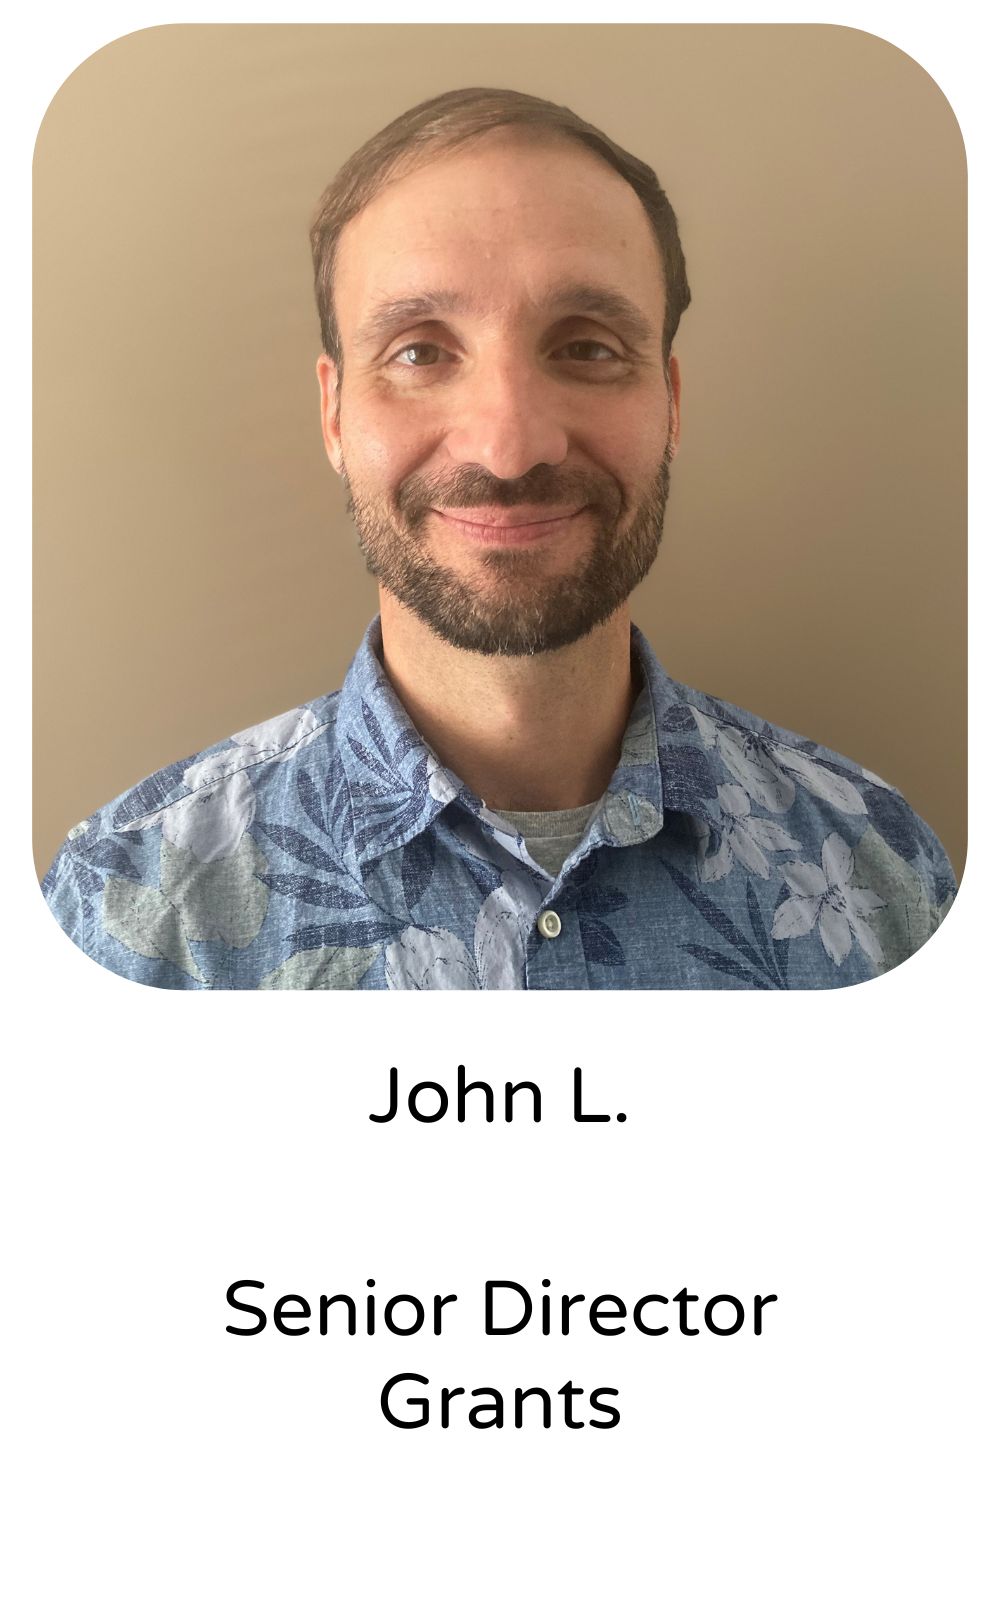 John L, Senior Director, Grants